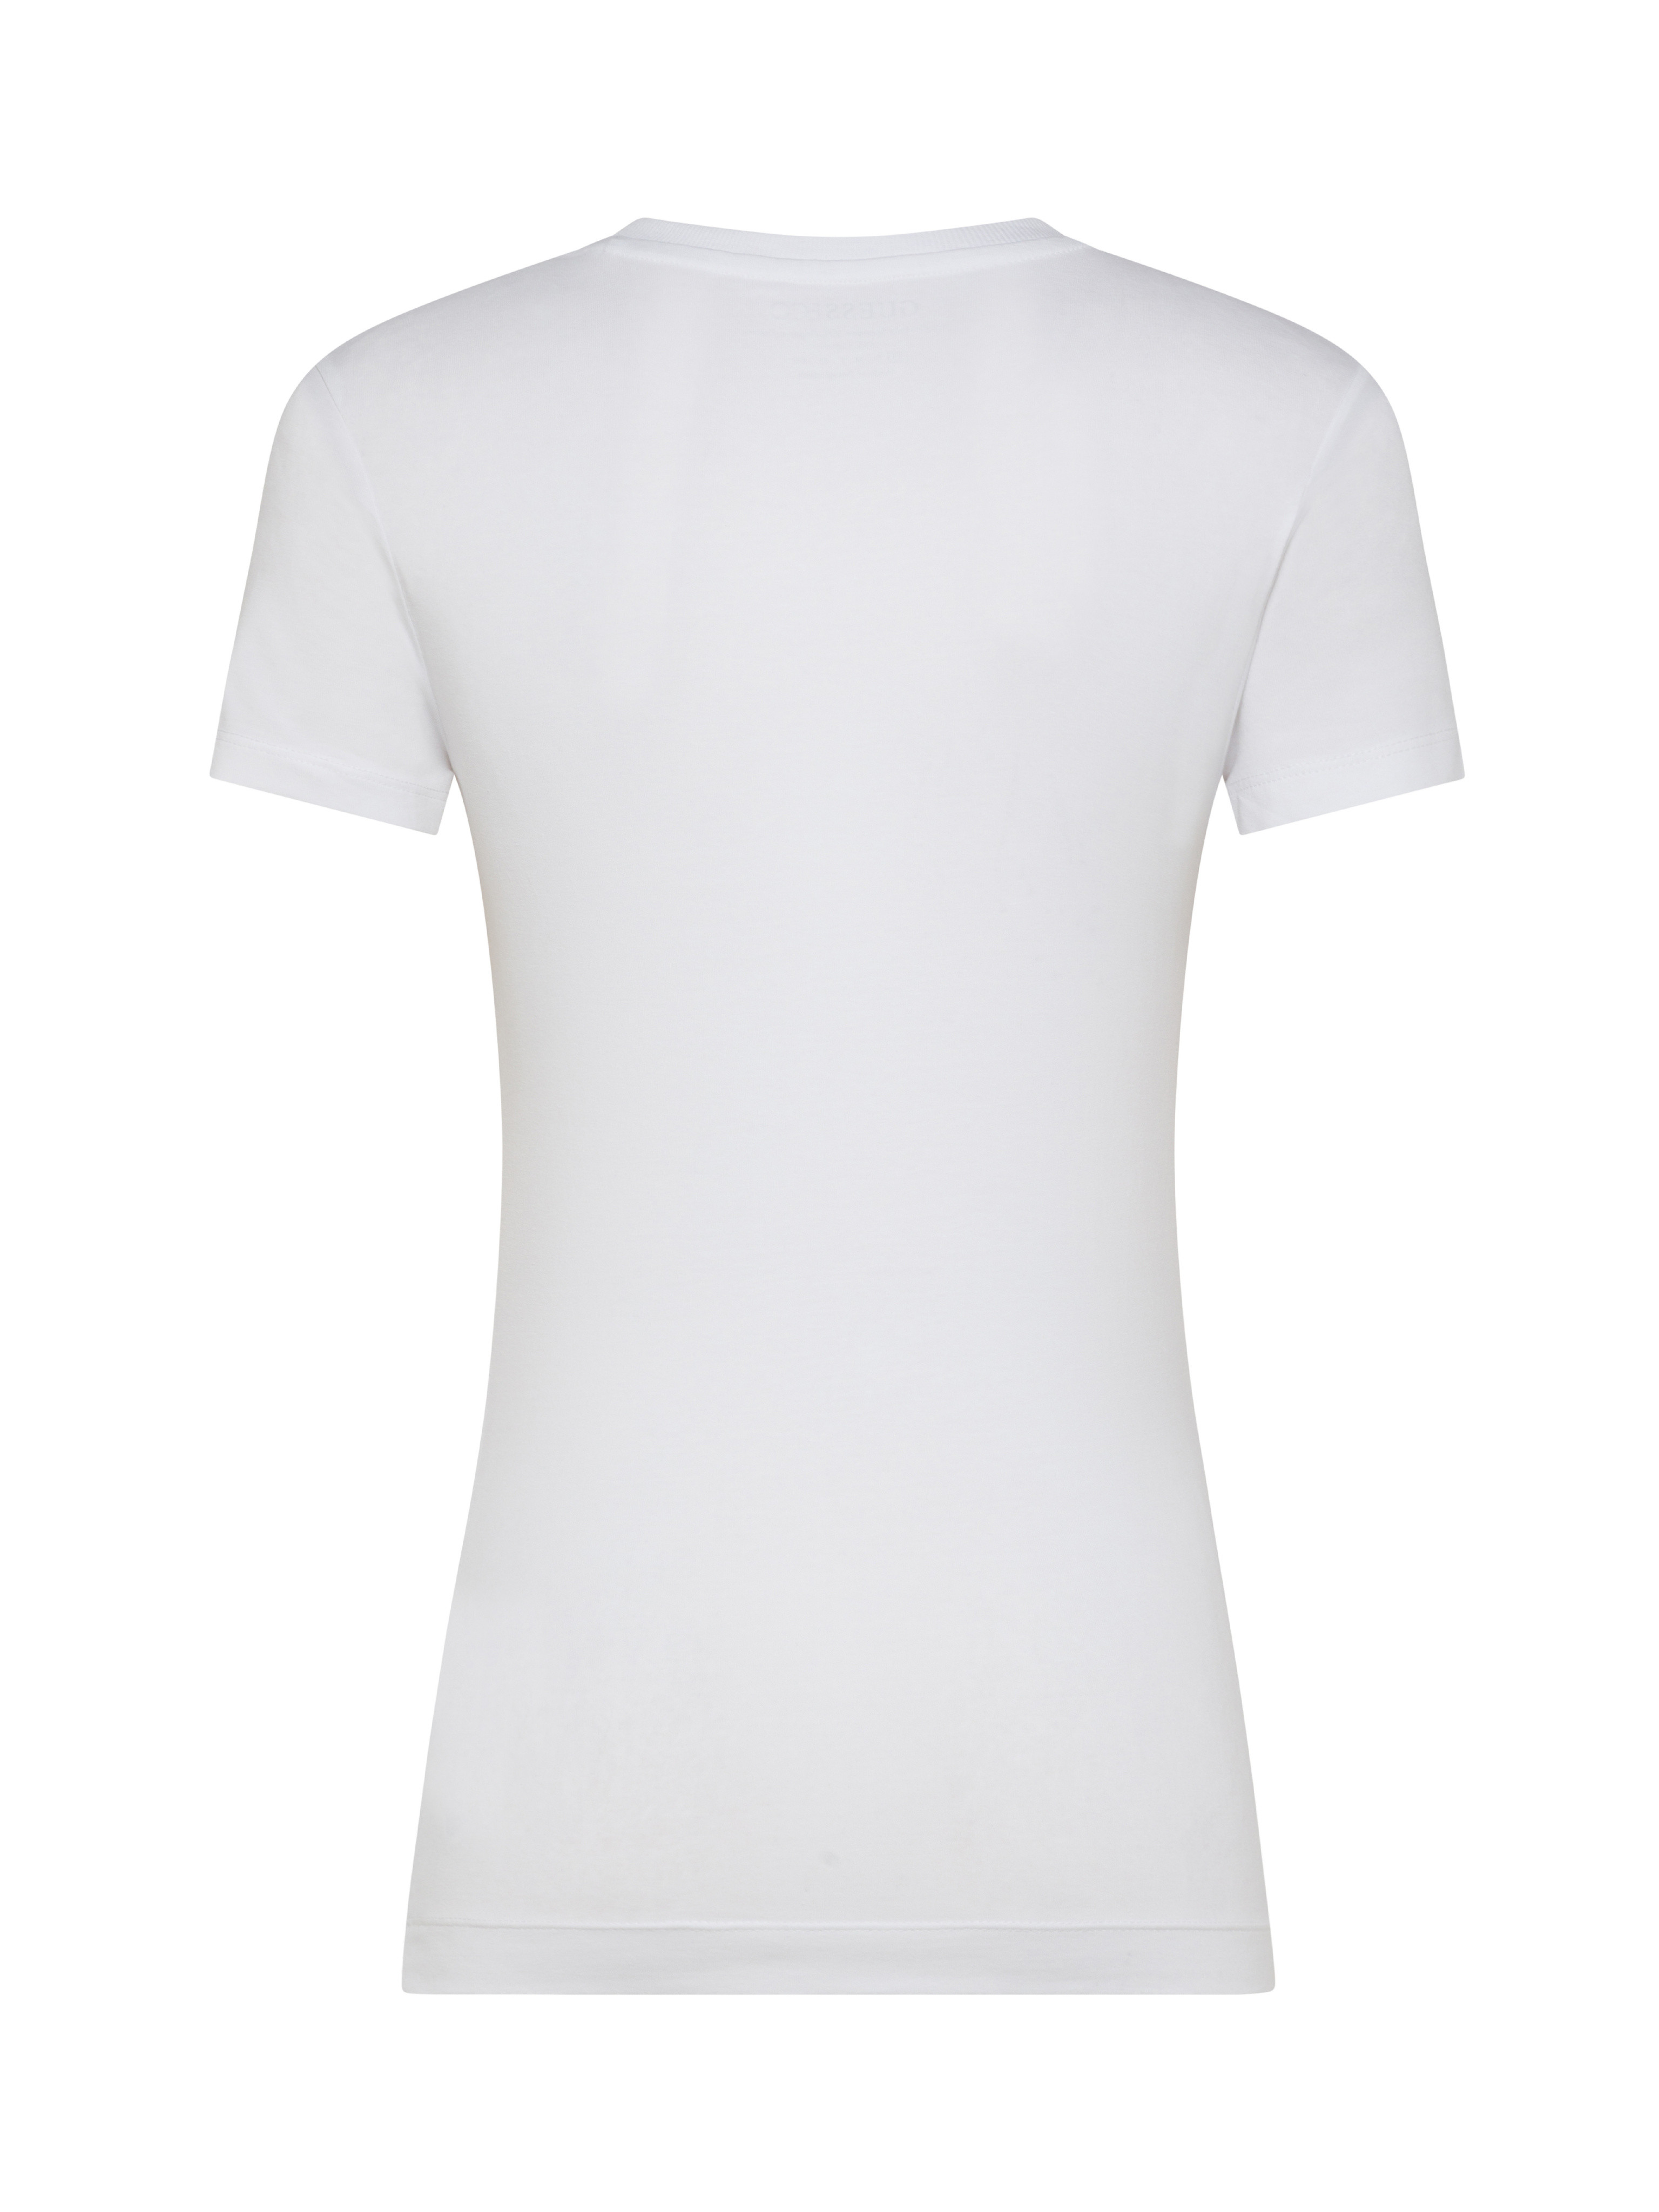 GUESS - Logo T-shirt, White, large image number 1